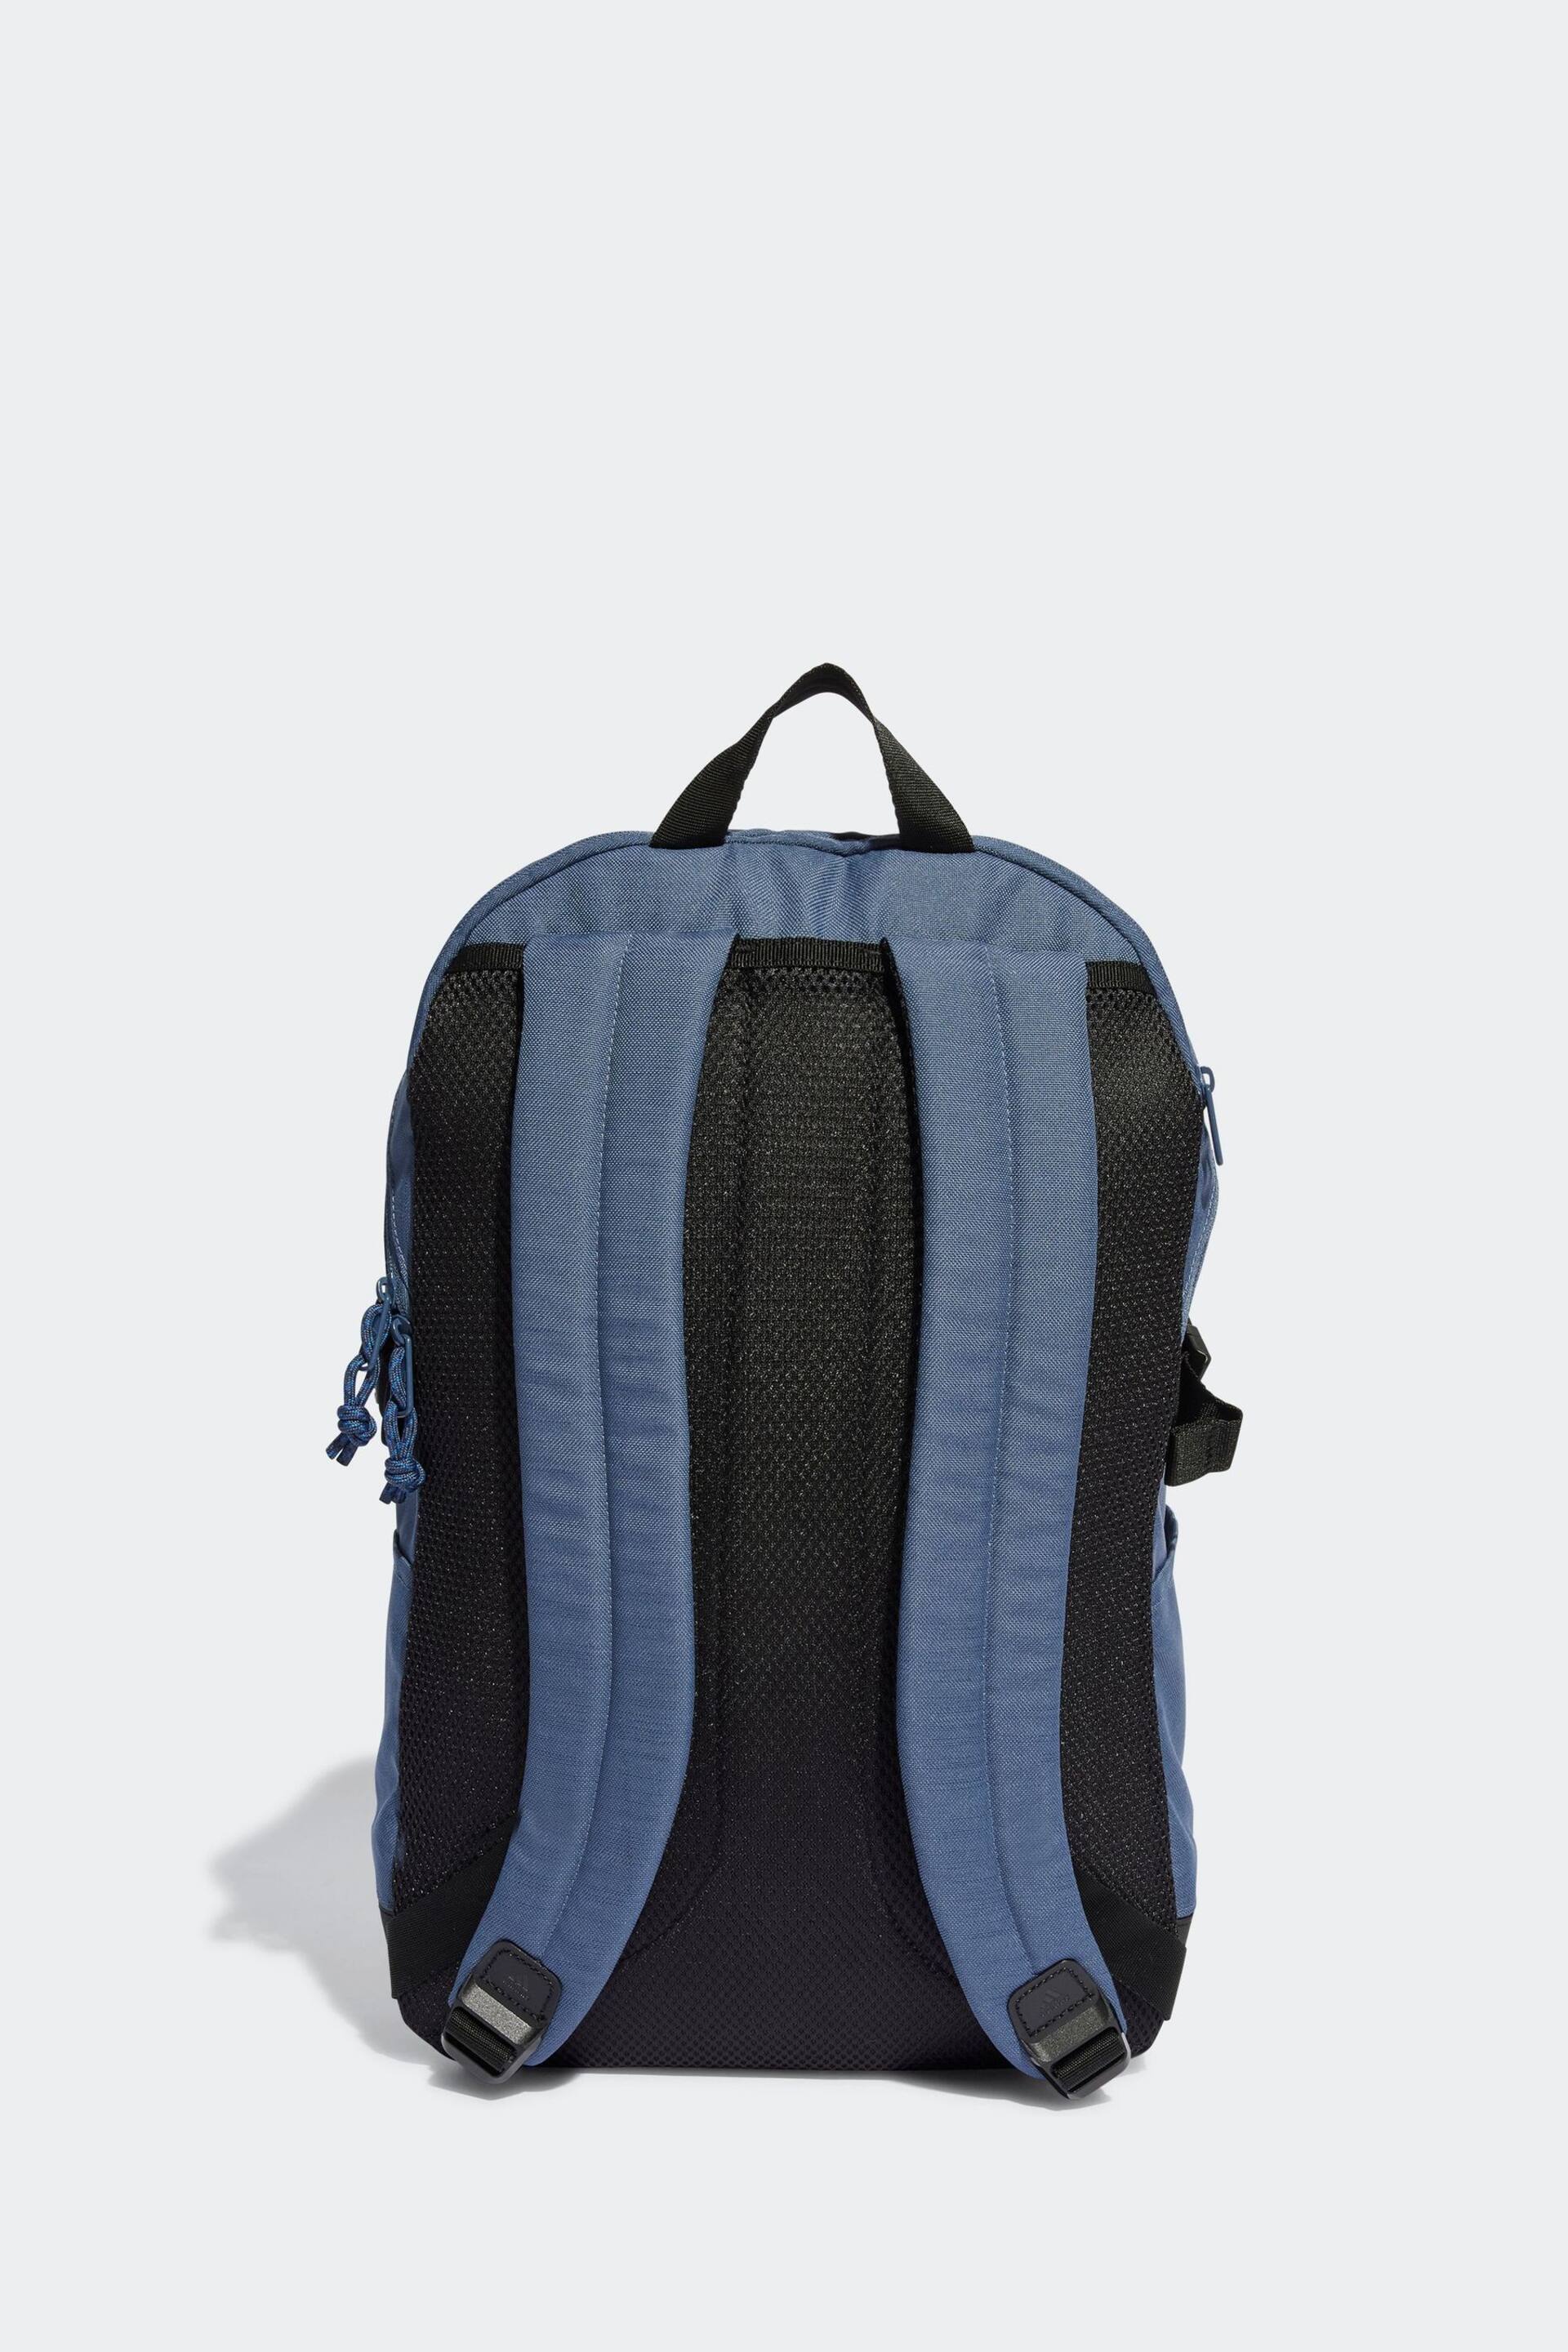 adidas Blue Power Backpack - Image 2 of 5